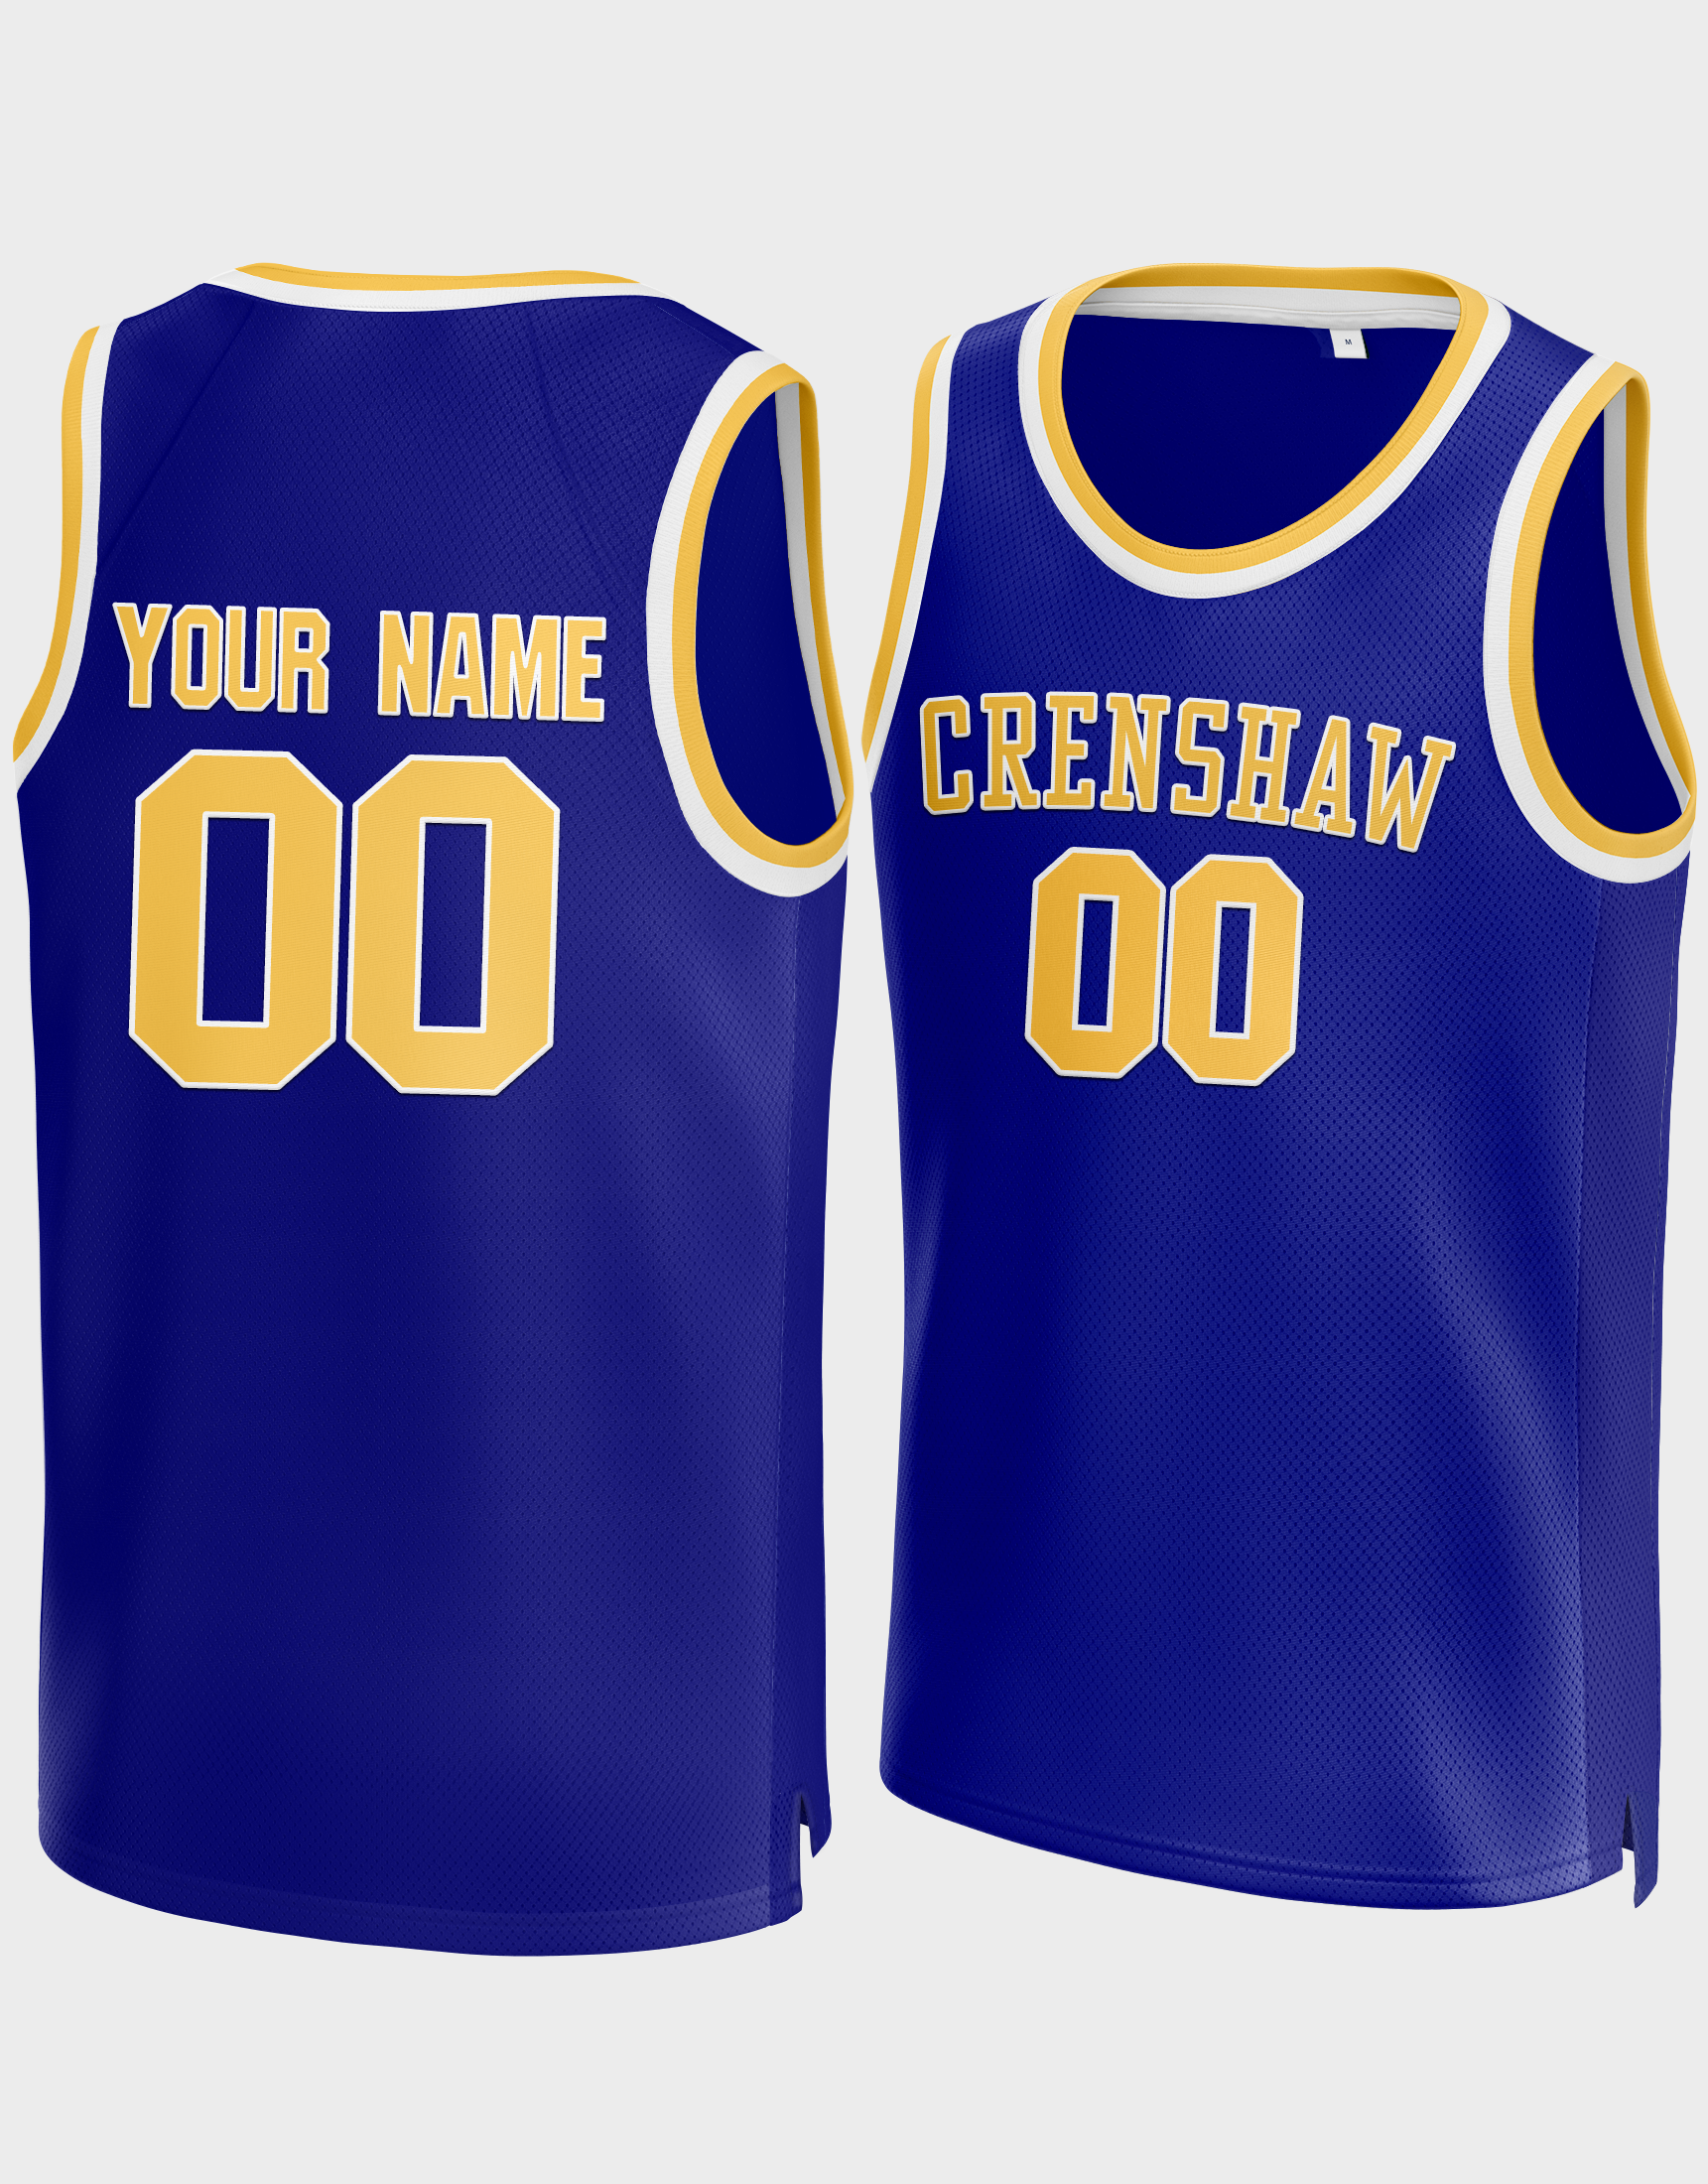 Crenshaw High School Letterman Jackets